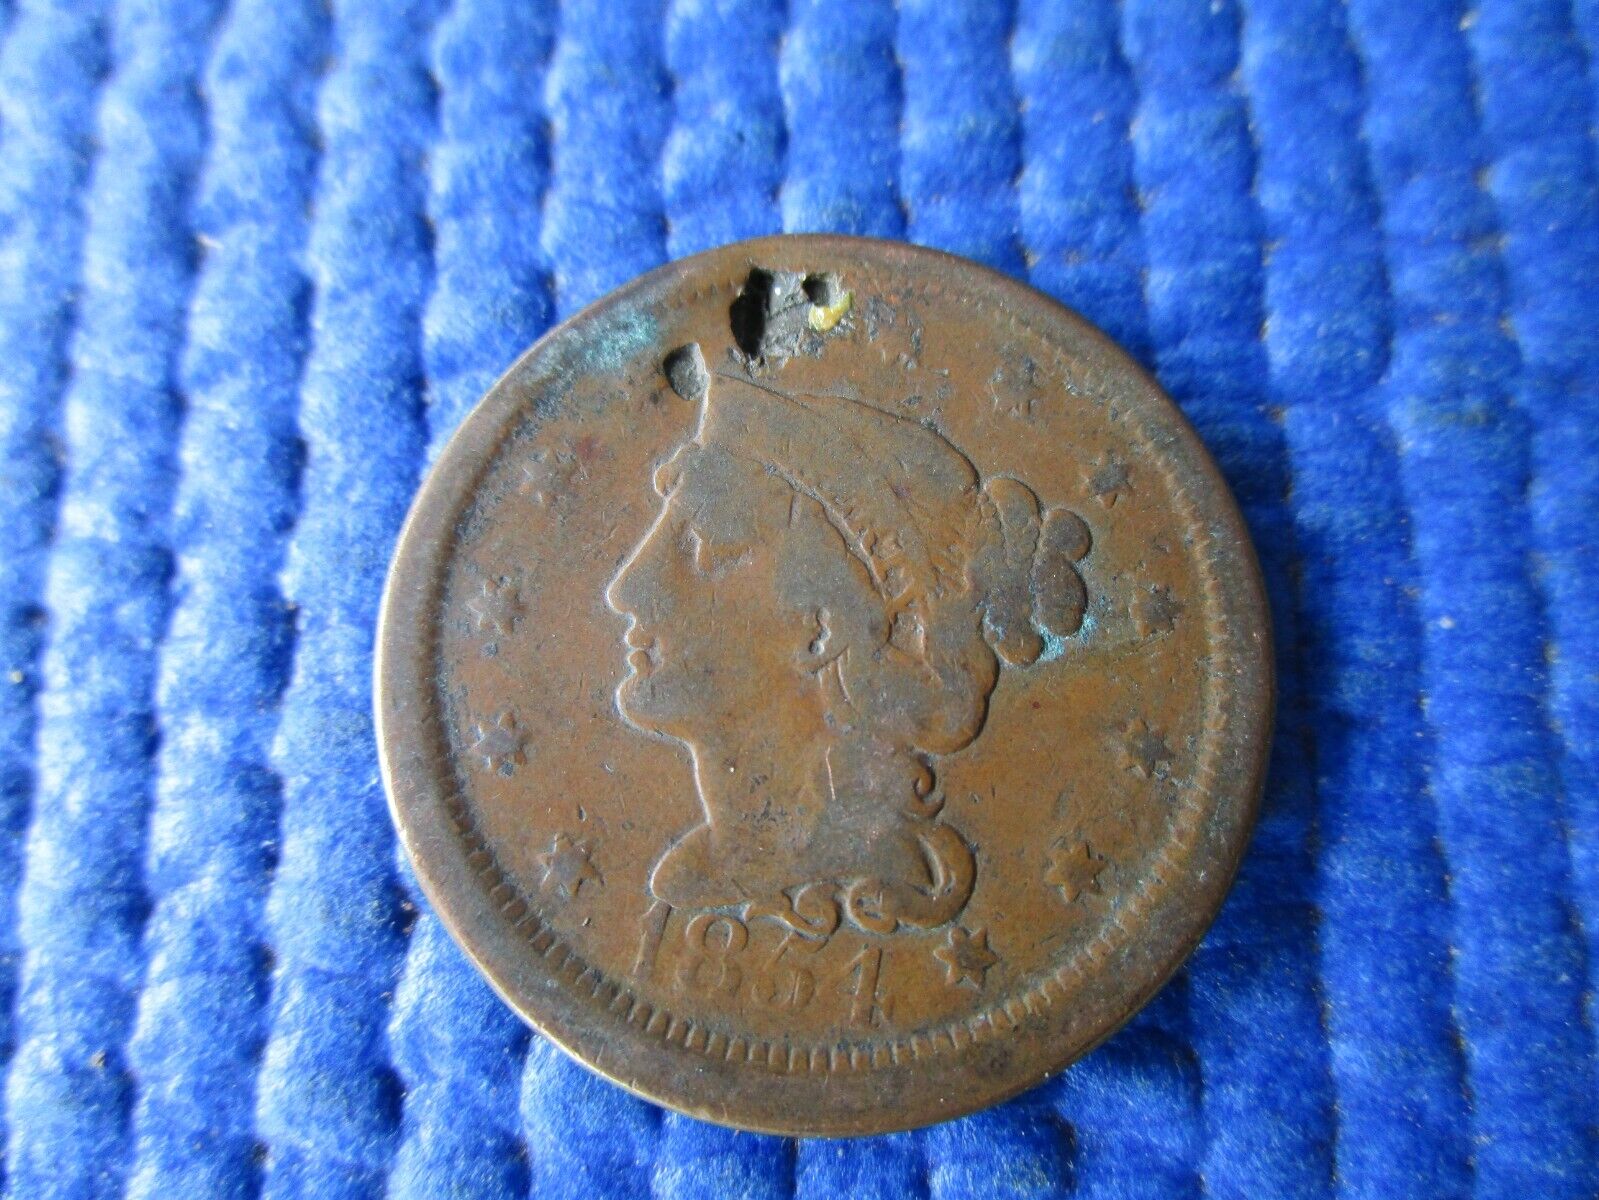 Antique Civil War Era Large Copper Cent Dated 1854